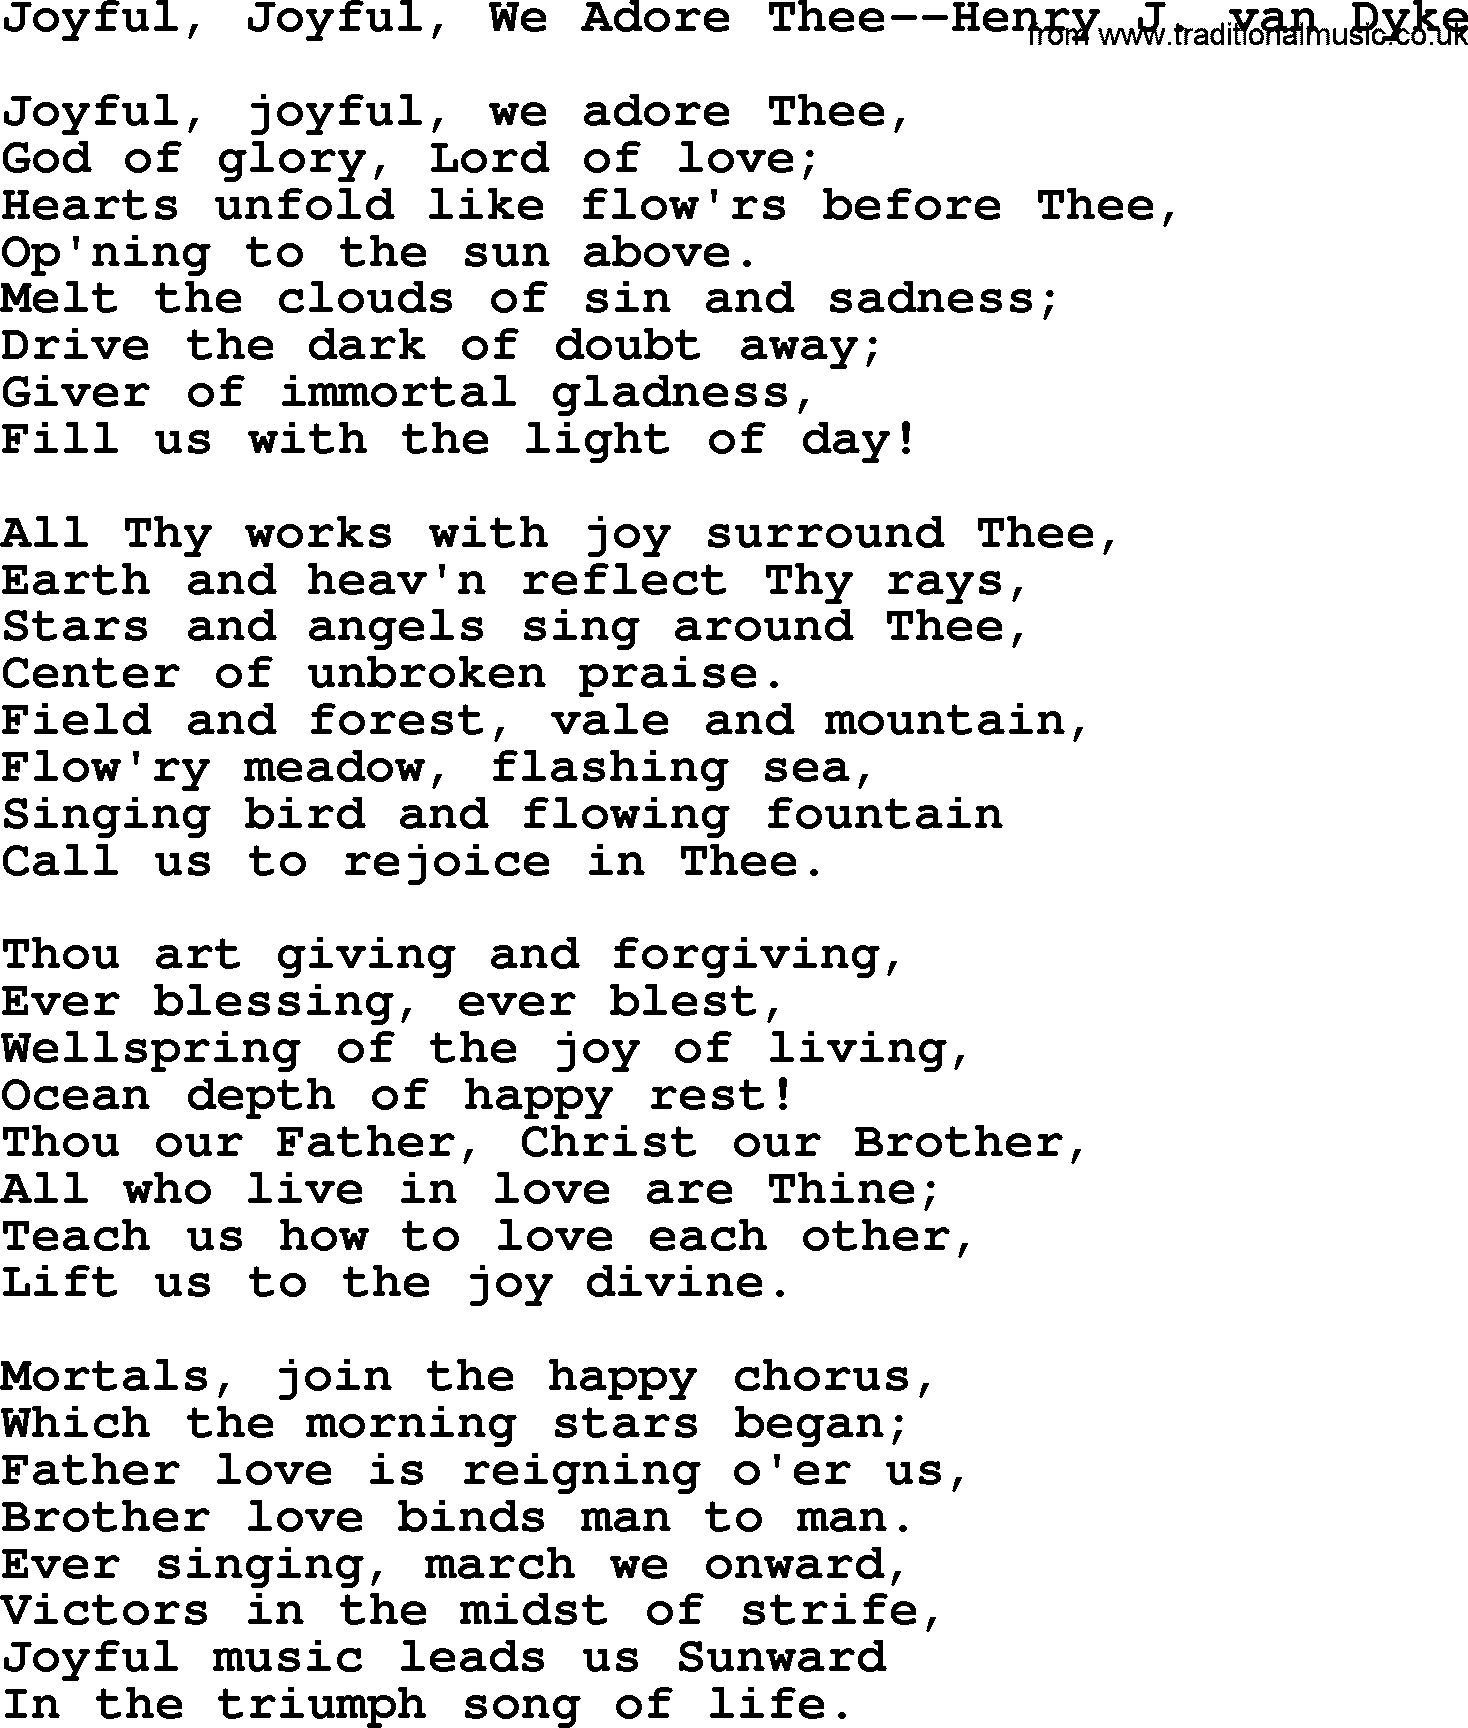 Hymns from the Psalms, Hymn: Joyful, Joyful, We Adore Thee-Henry J. Van Dyke, lyrics with PDF